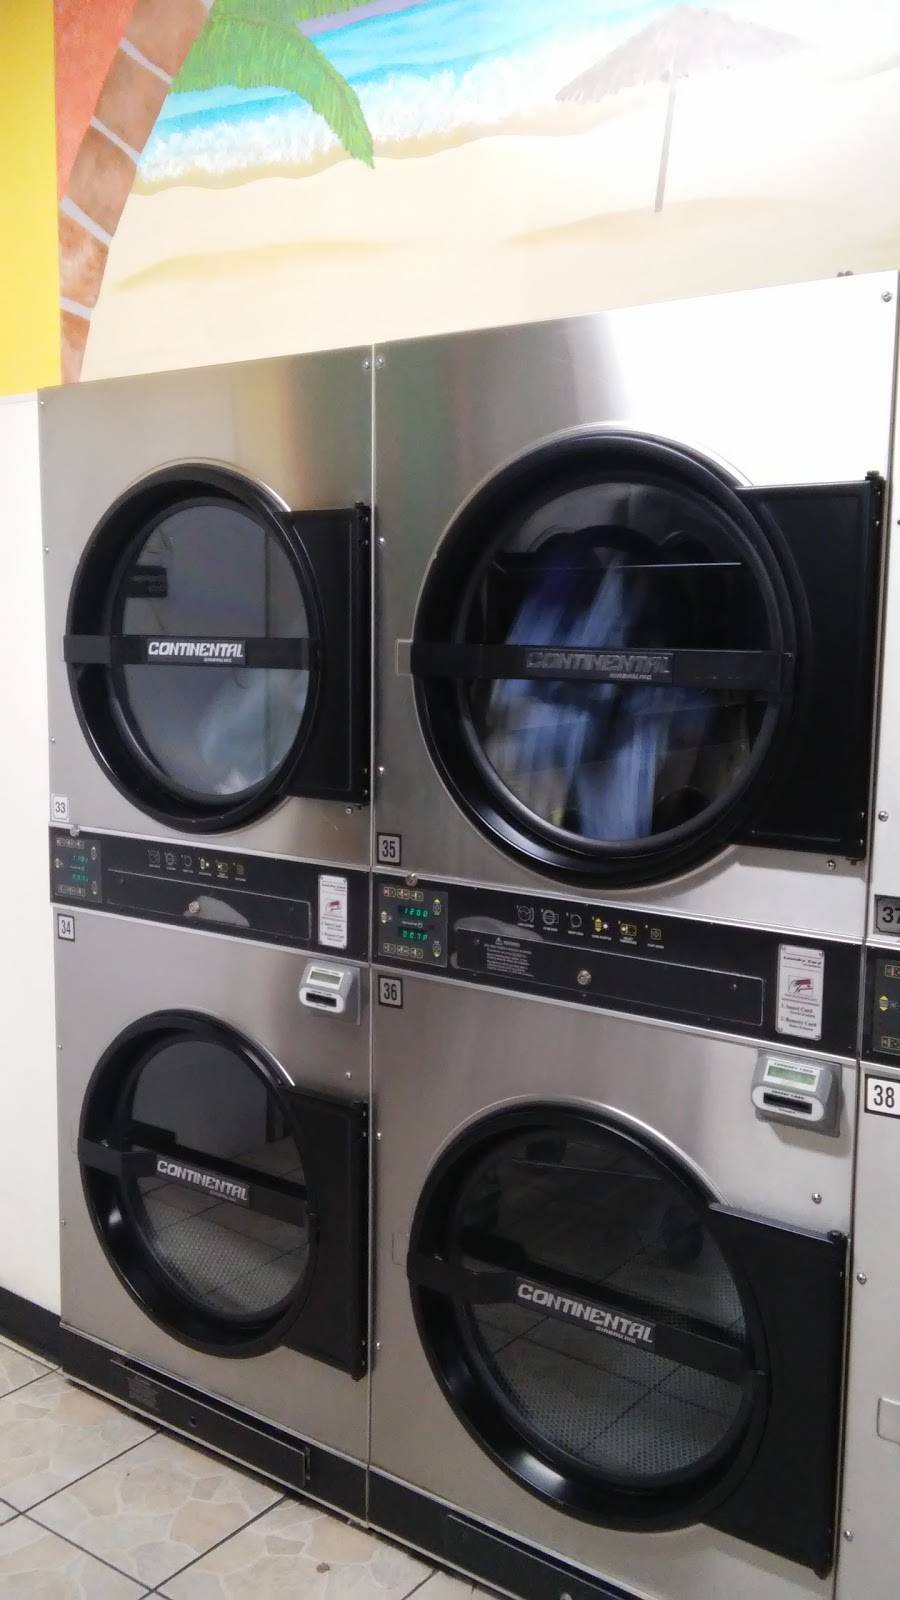 Sparklean Laundry: Laundromat & Wash,Dry,Fold Service | 1135 Columbus St, Bakersfield, CA 93305 | Phone: (661) 361-8090